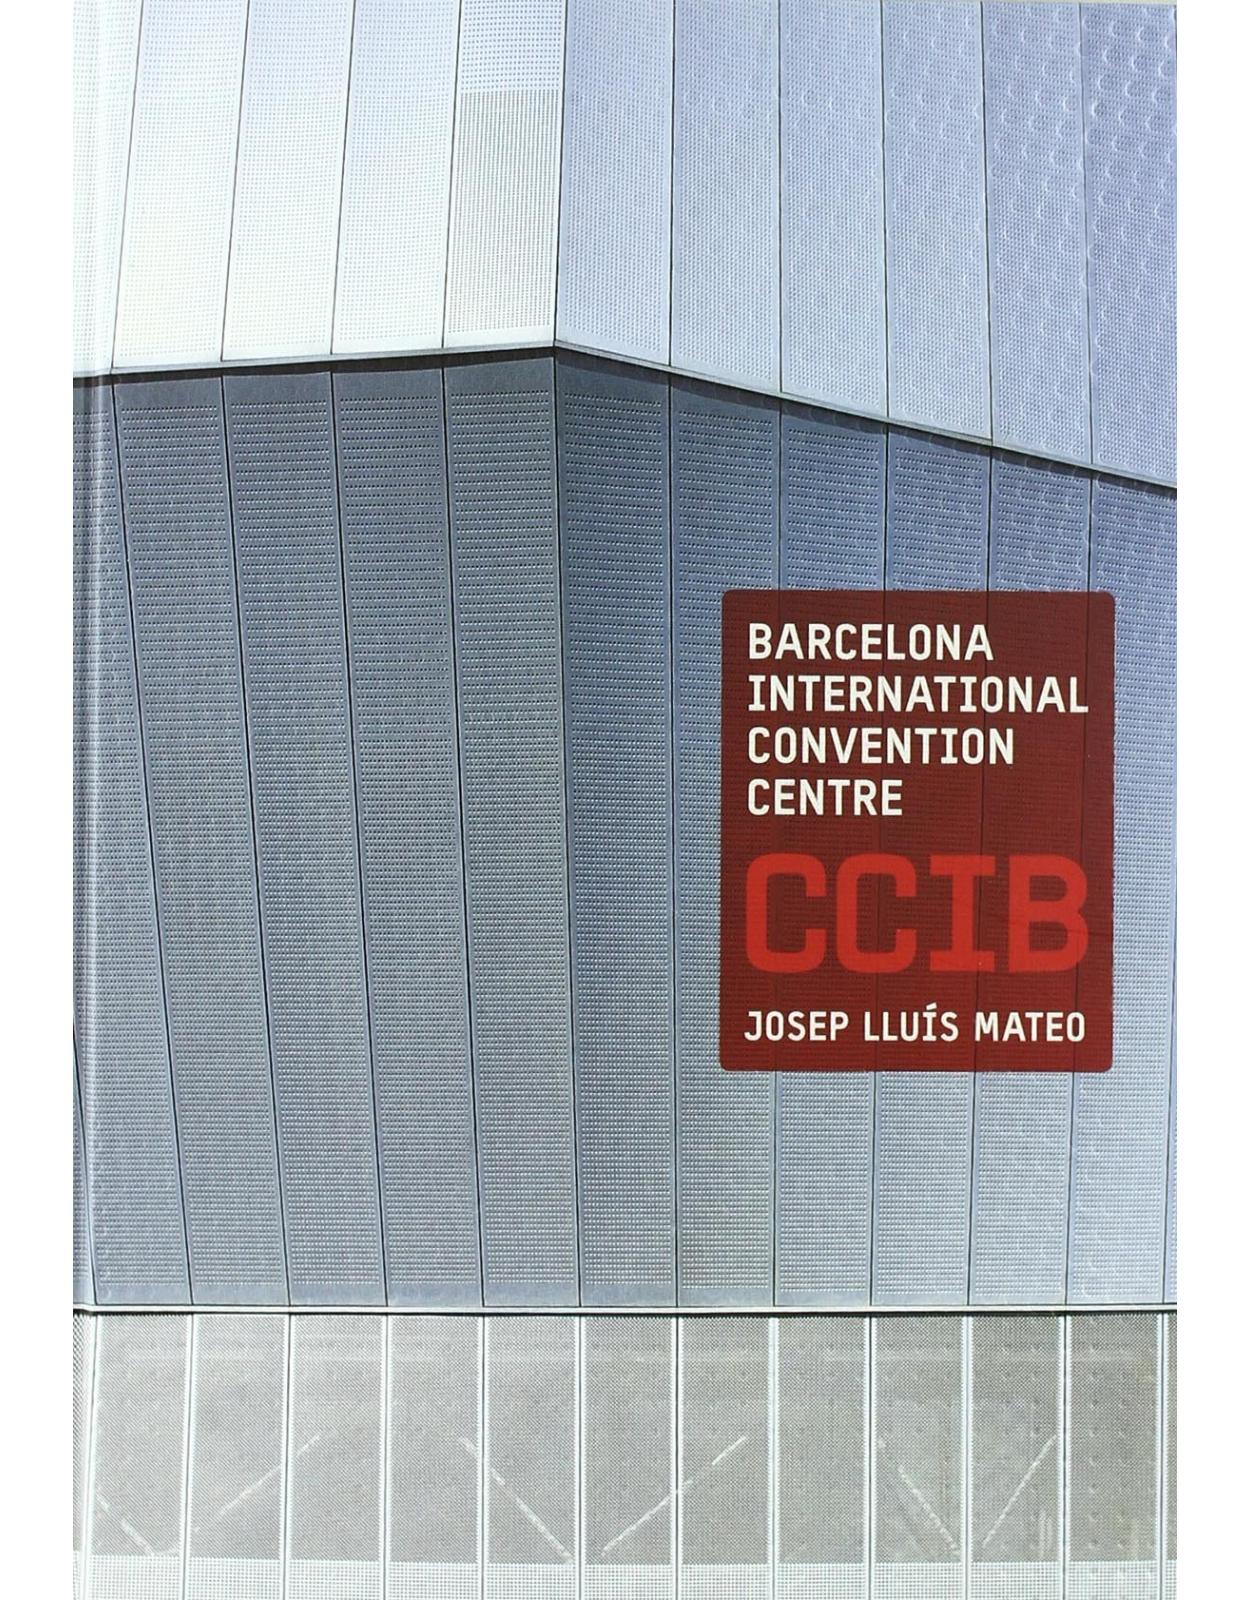 Barcelona International Convention Center, CCIB: Josep Lluis Mateo, MAP Architects